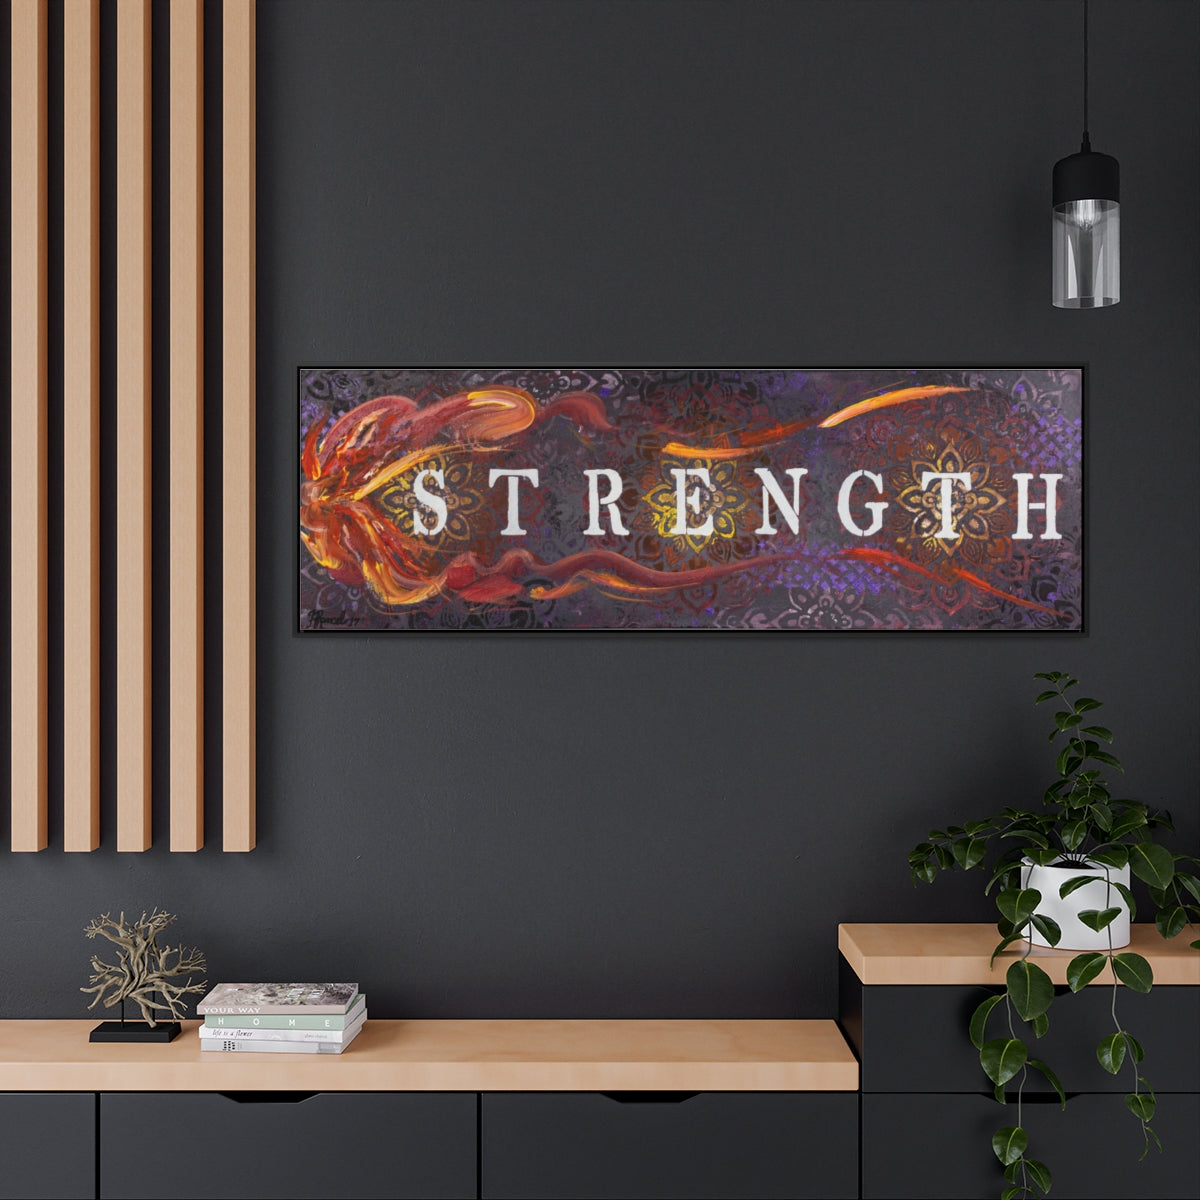 Strength Fire Mandala Inspirational Horizontal Framed Gallery Wrapped Canvas Print